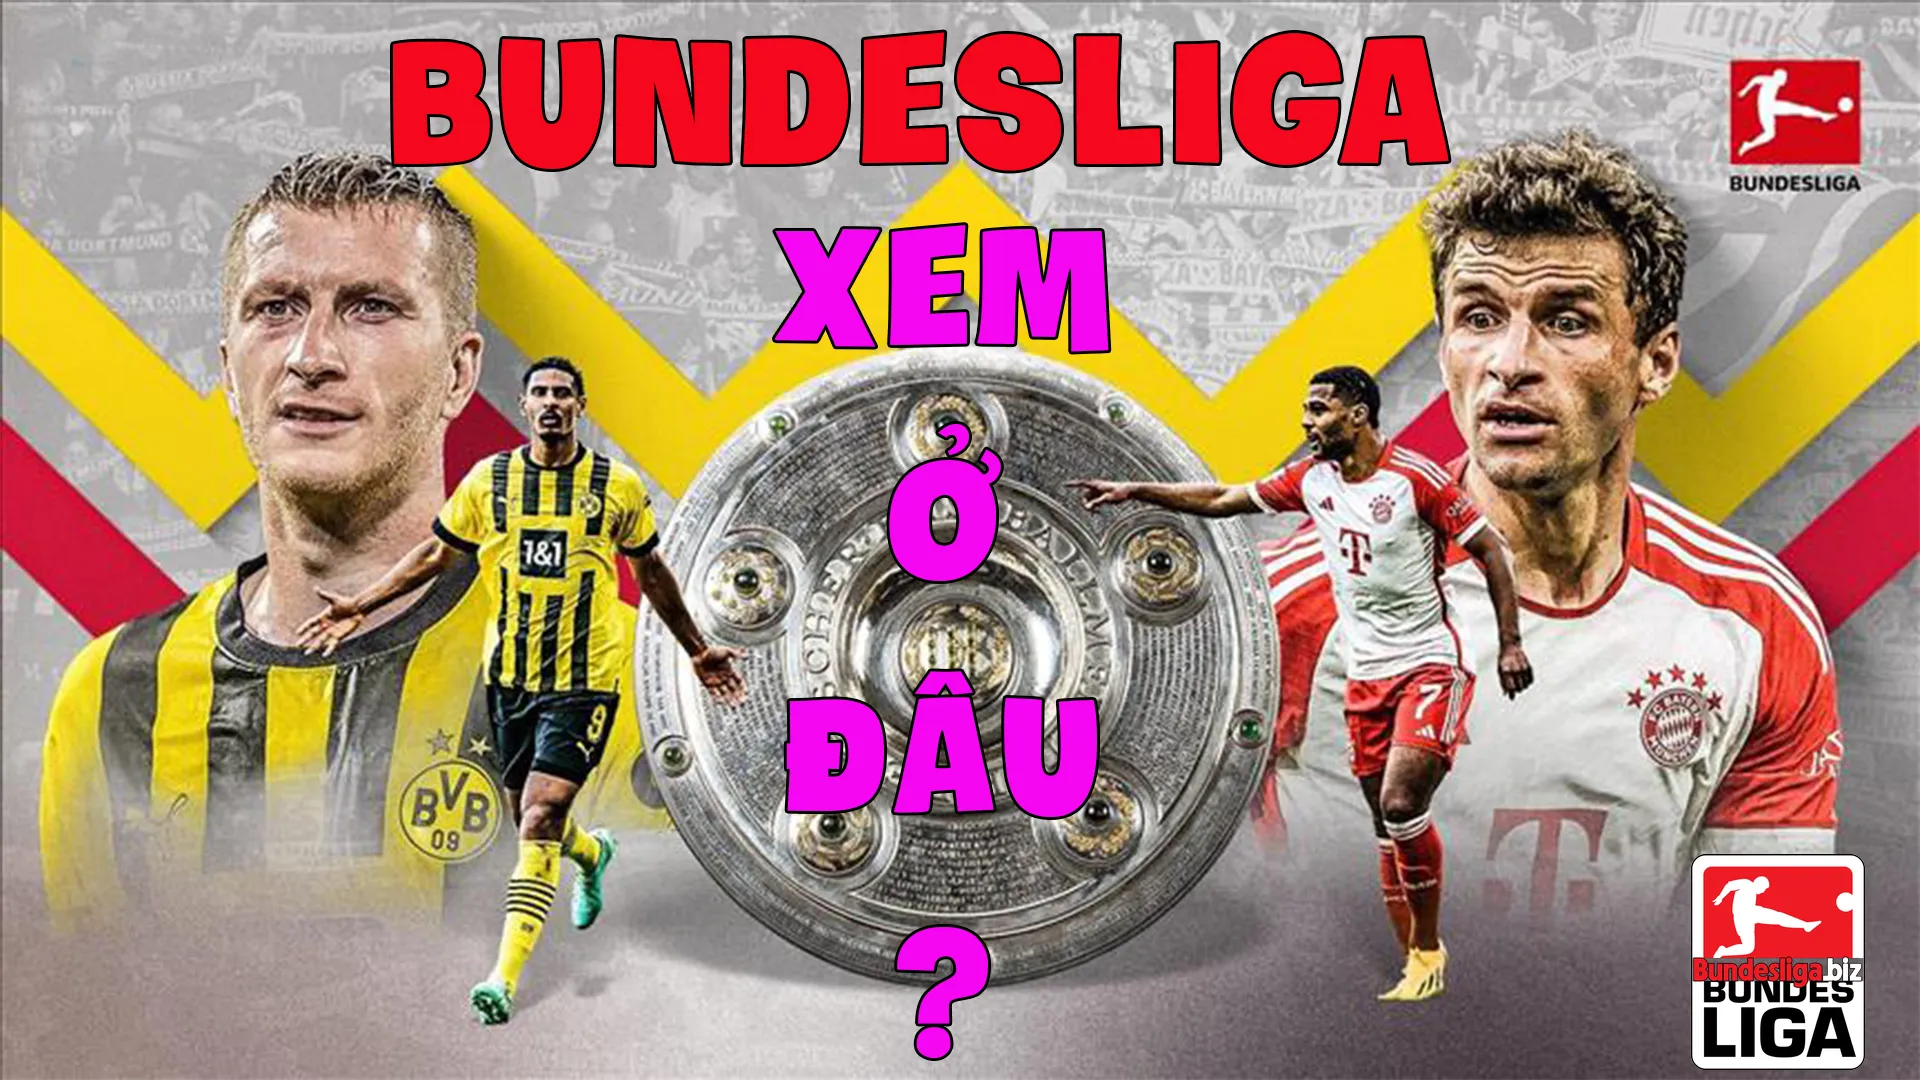 Bundesliga xem ở đâu? Trực tiếp Bundesliga trên kênh nào?